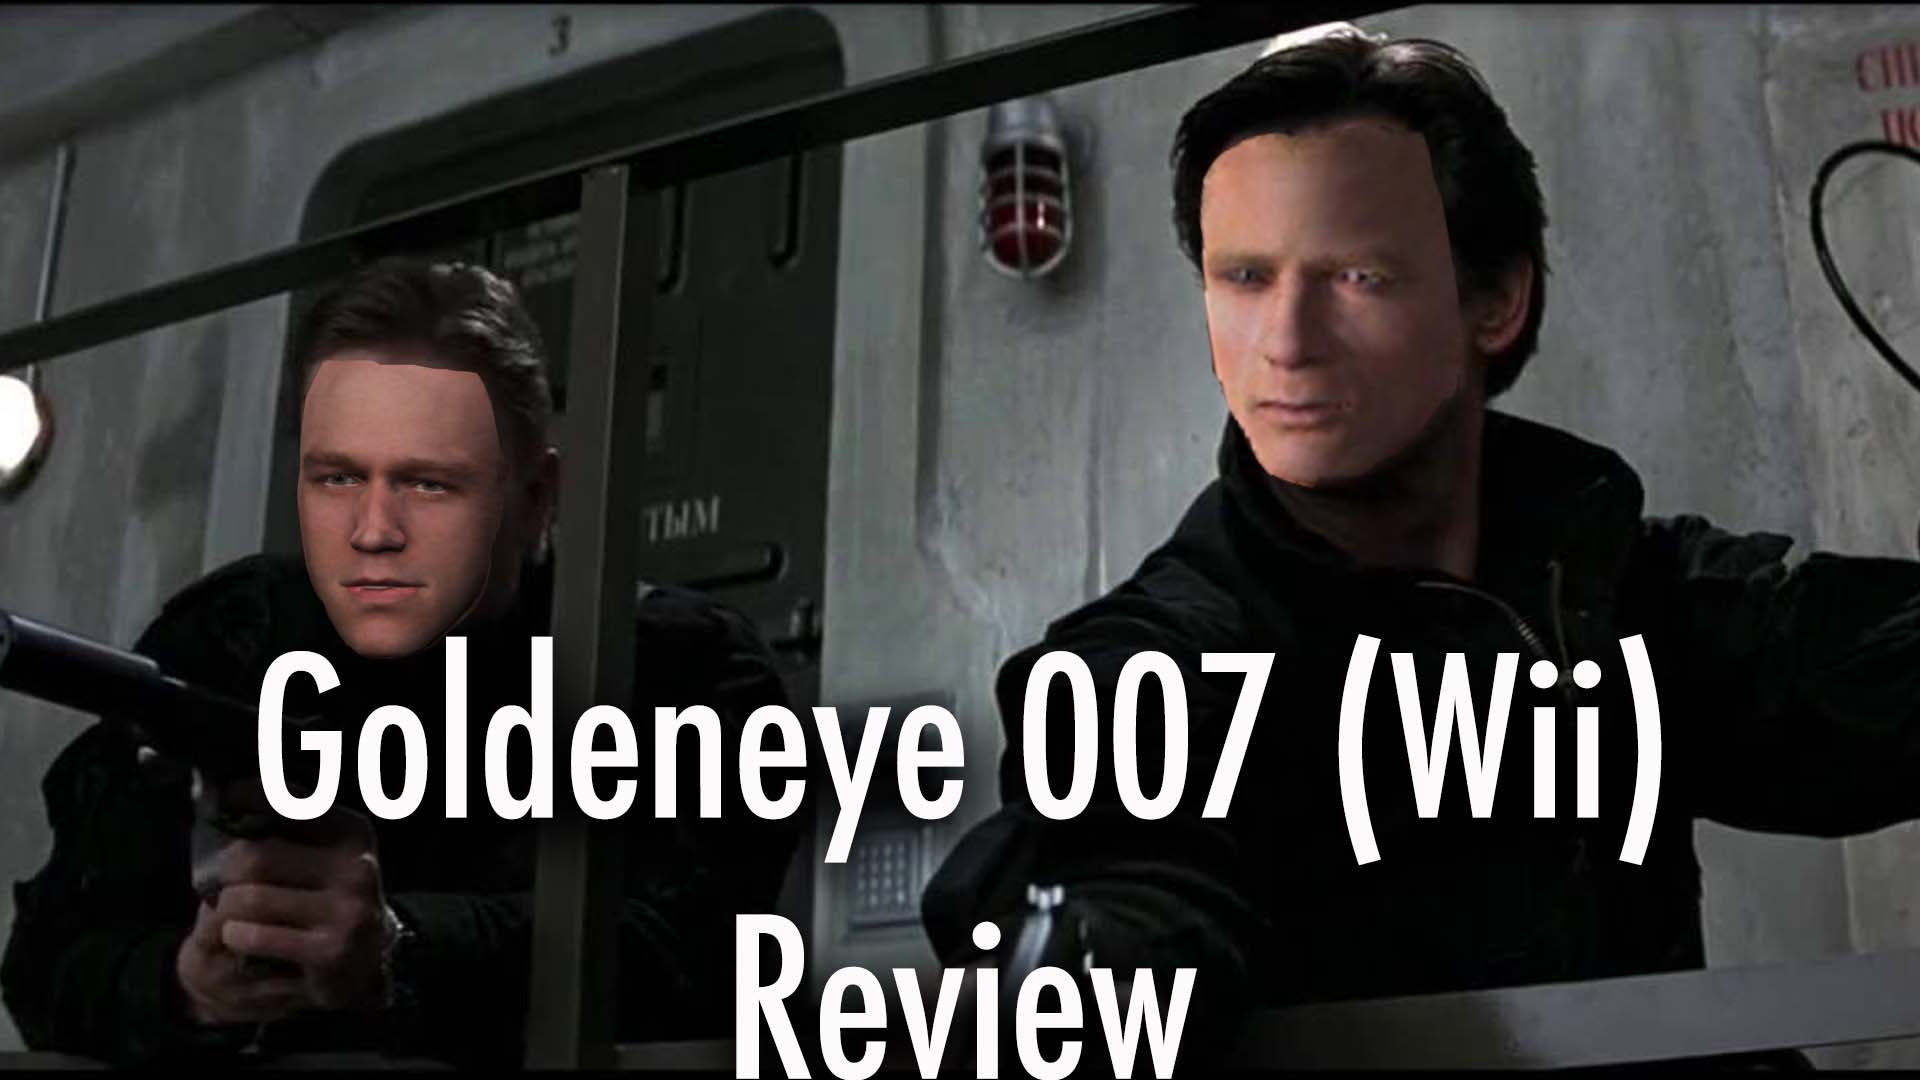 Goldeneye 007 review